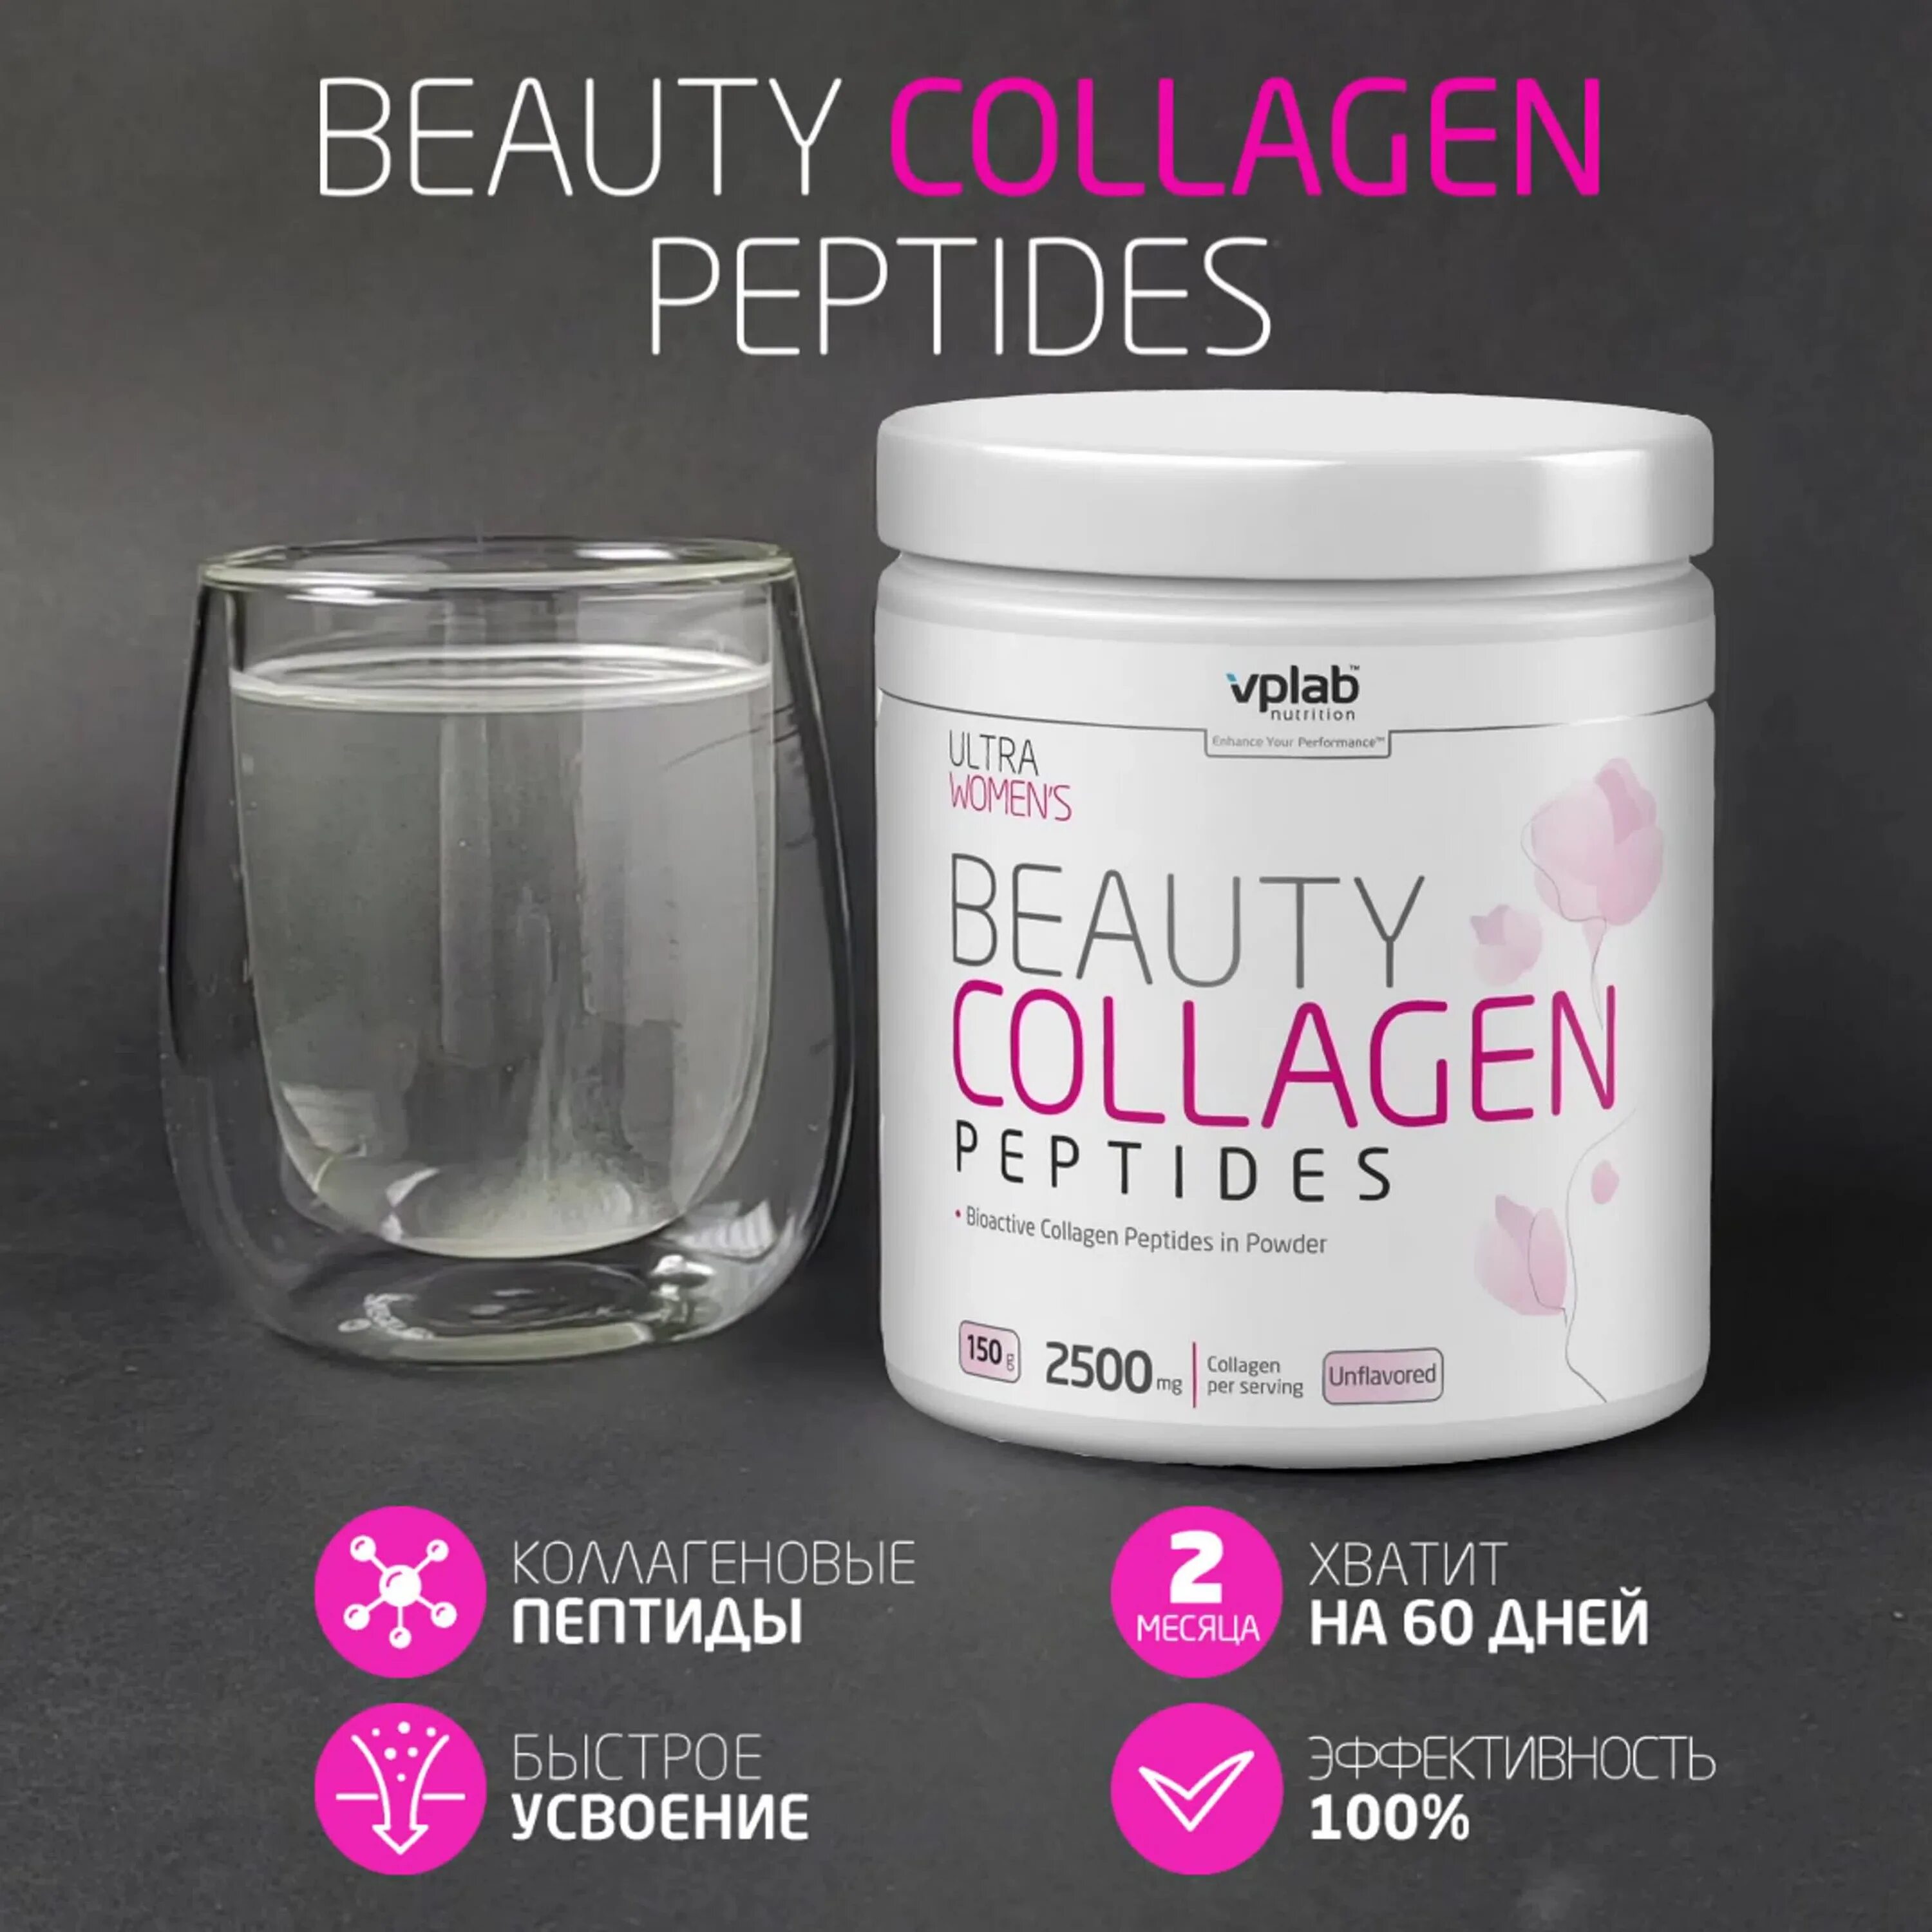 Collagen peptides nl. Коллаген VPLAB Collagen Peptides. Бьюти коллаген пептид VPLAB. Коллаген VPLAB Nutrition Beauty Collagen Peptides. Коллаген пептид 430мл.